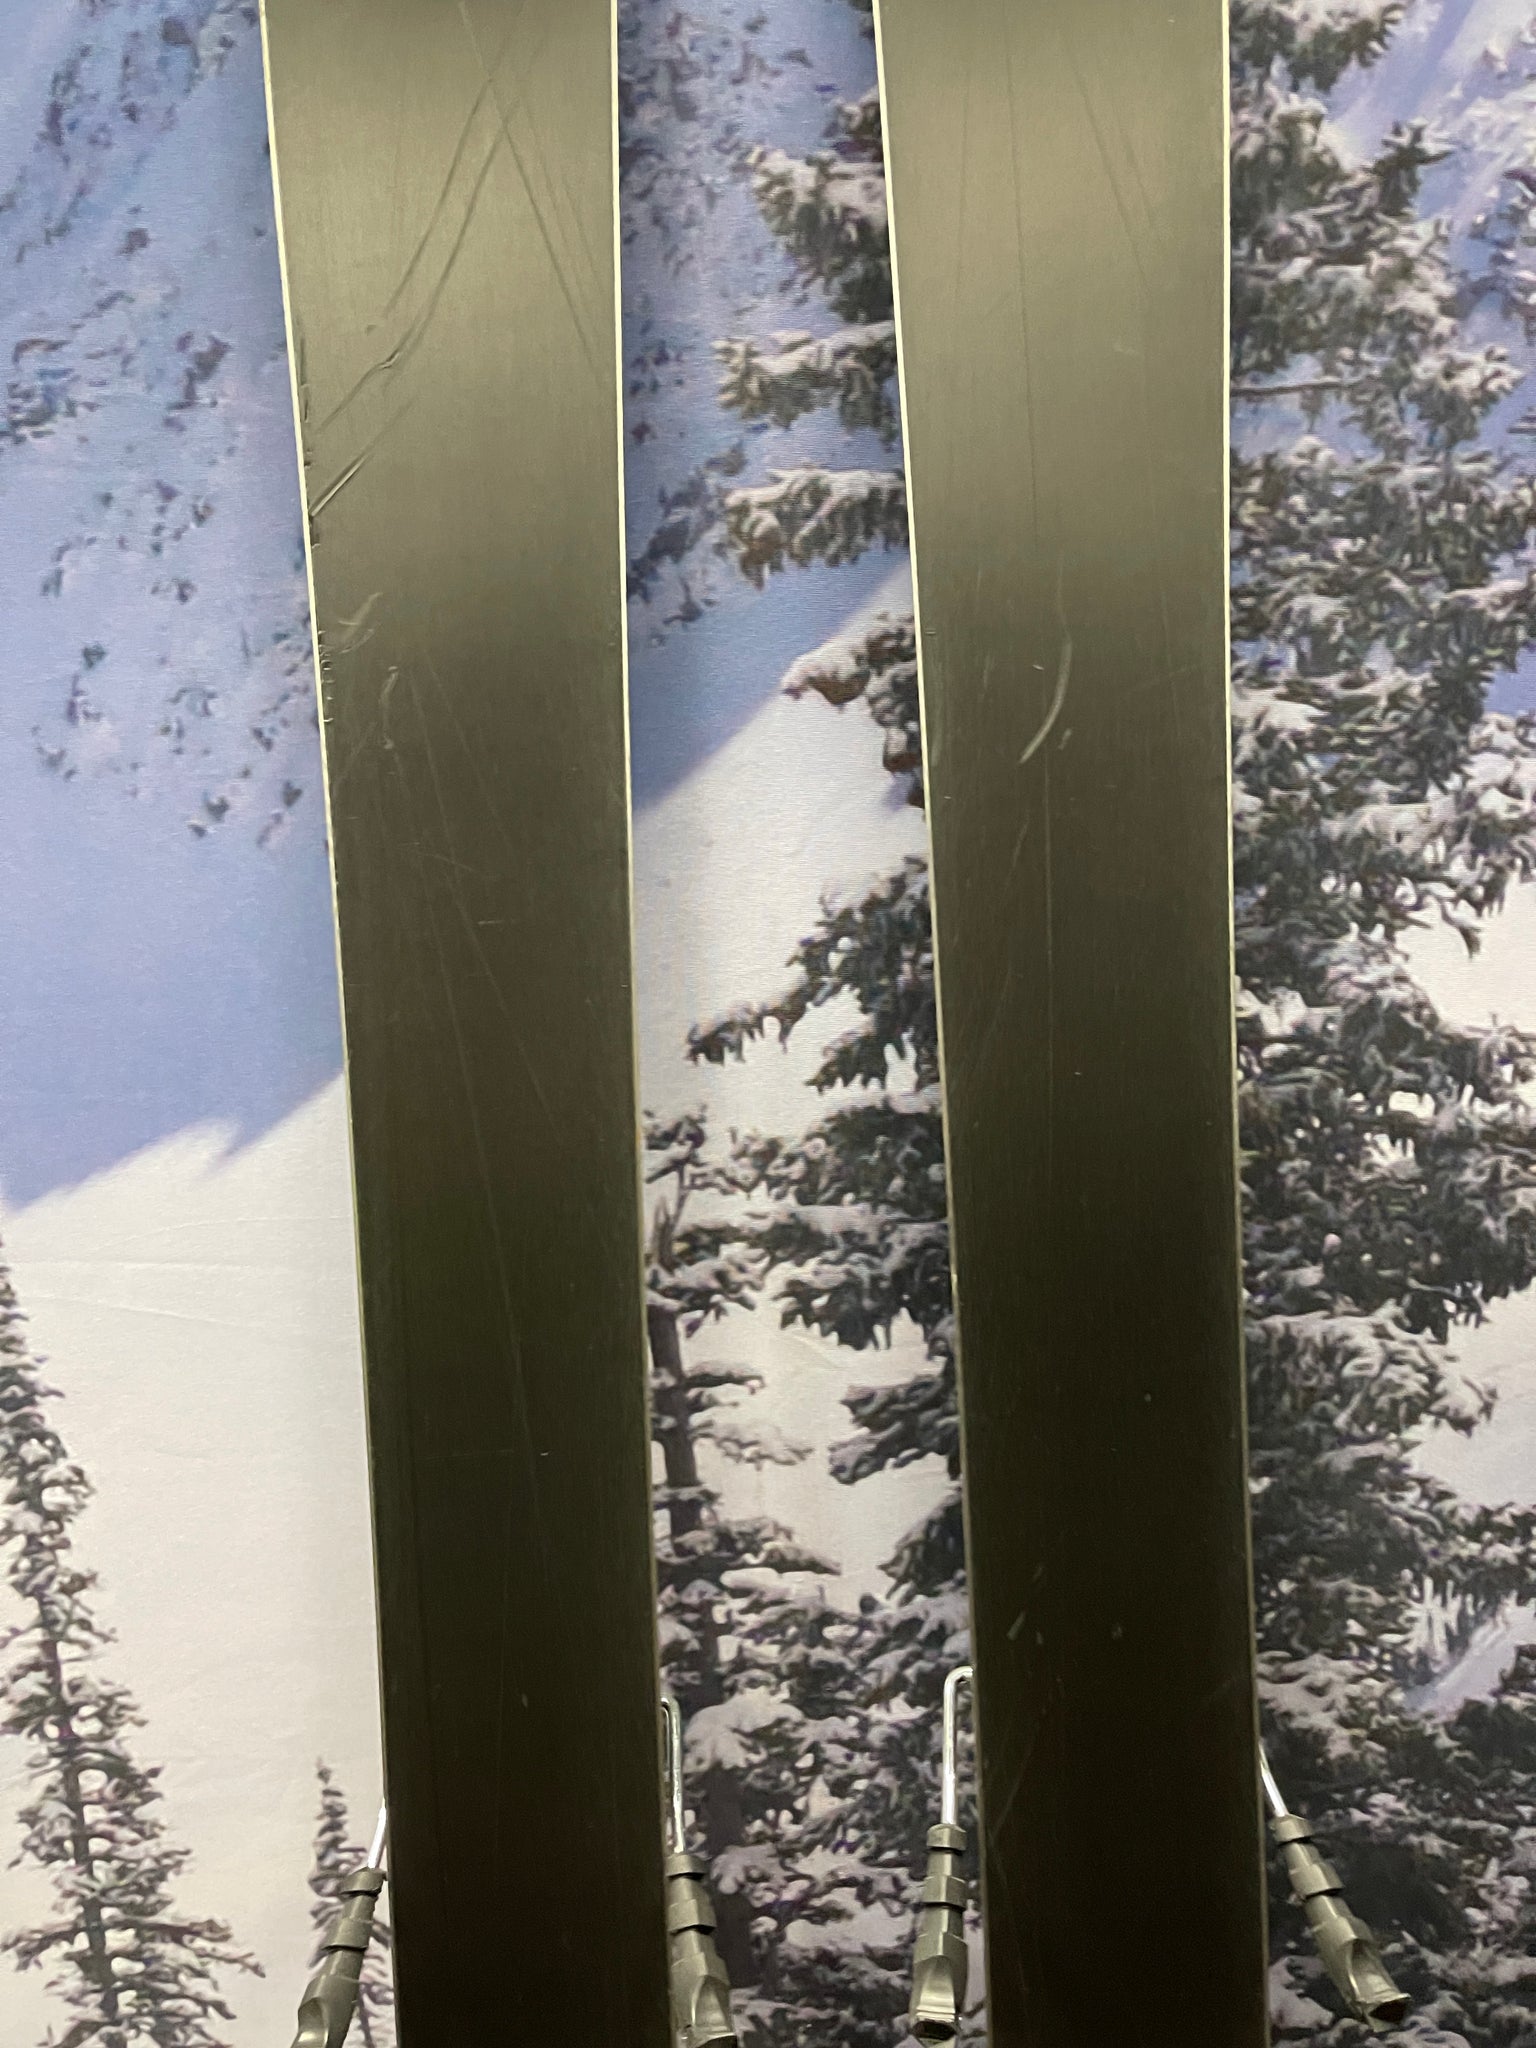 USED Elan Ripstick 94 W 170cm w/ Tyrolia SP 10 Bindings - 20/21 Women's Ski